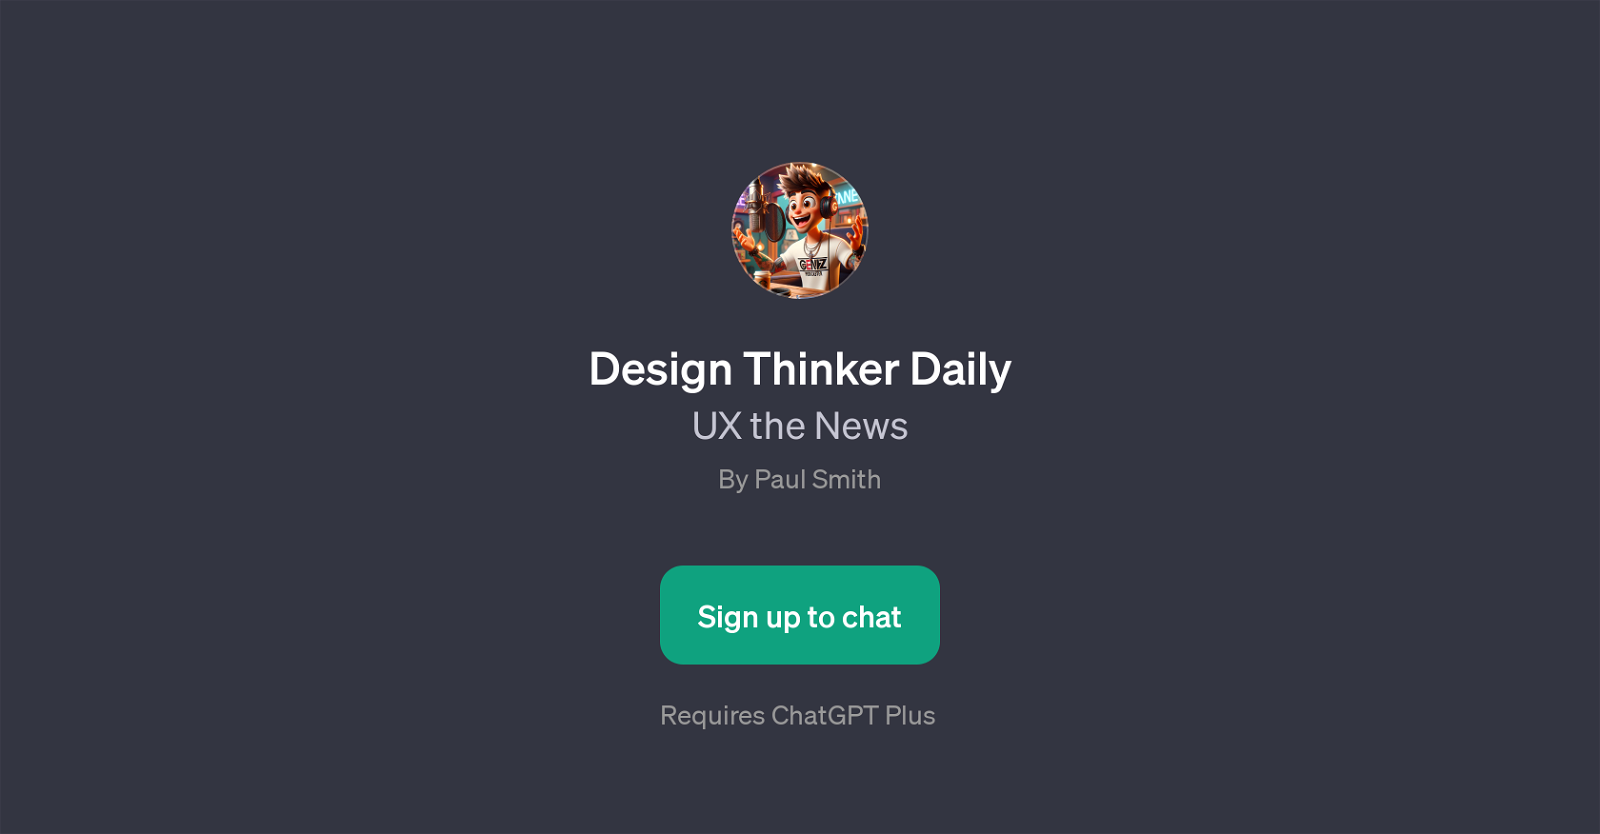 Design Thinker Daily website